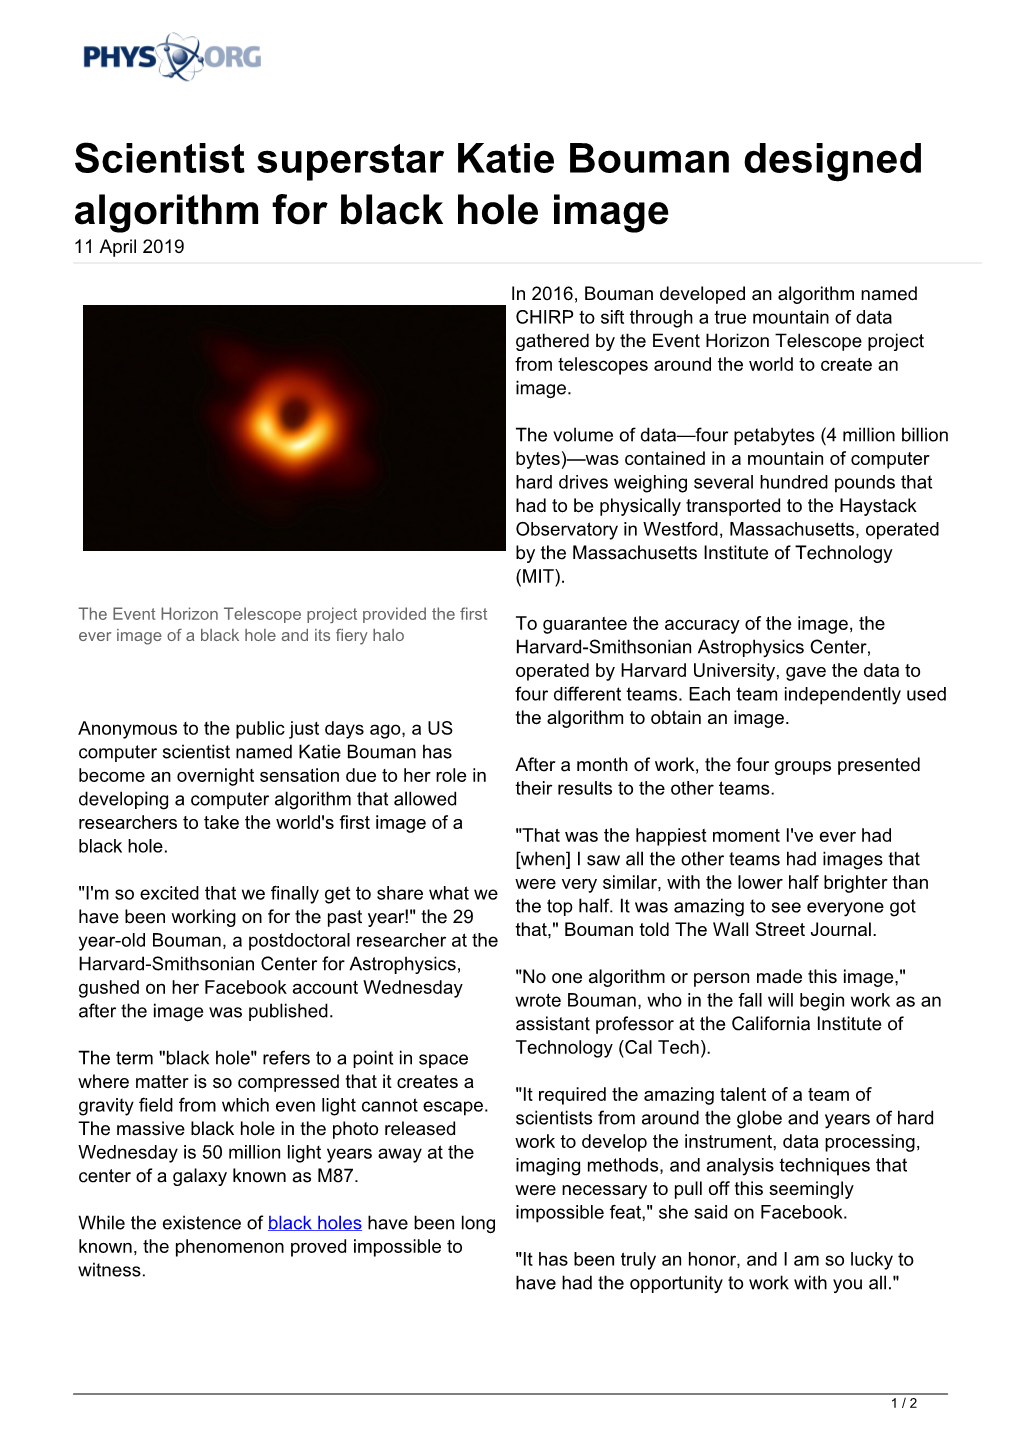 Scientist Superstar Katie Bouman Designed Algorithm for Black Hole Image 11 April 2019